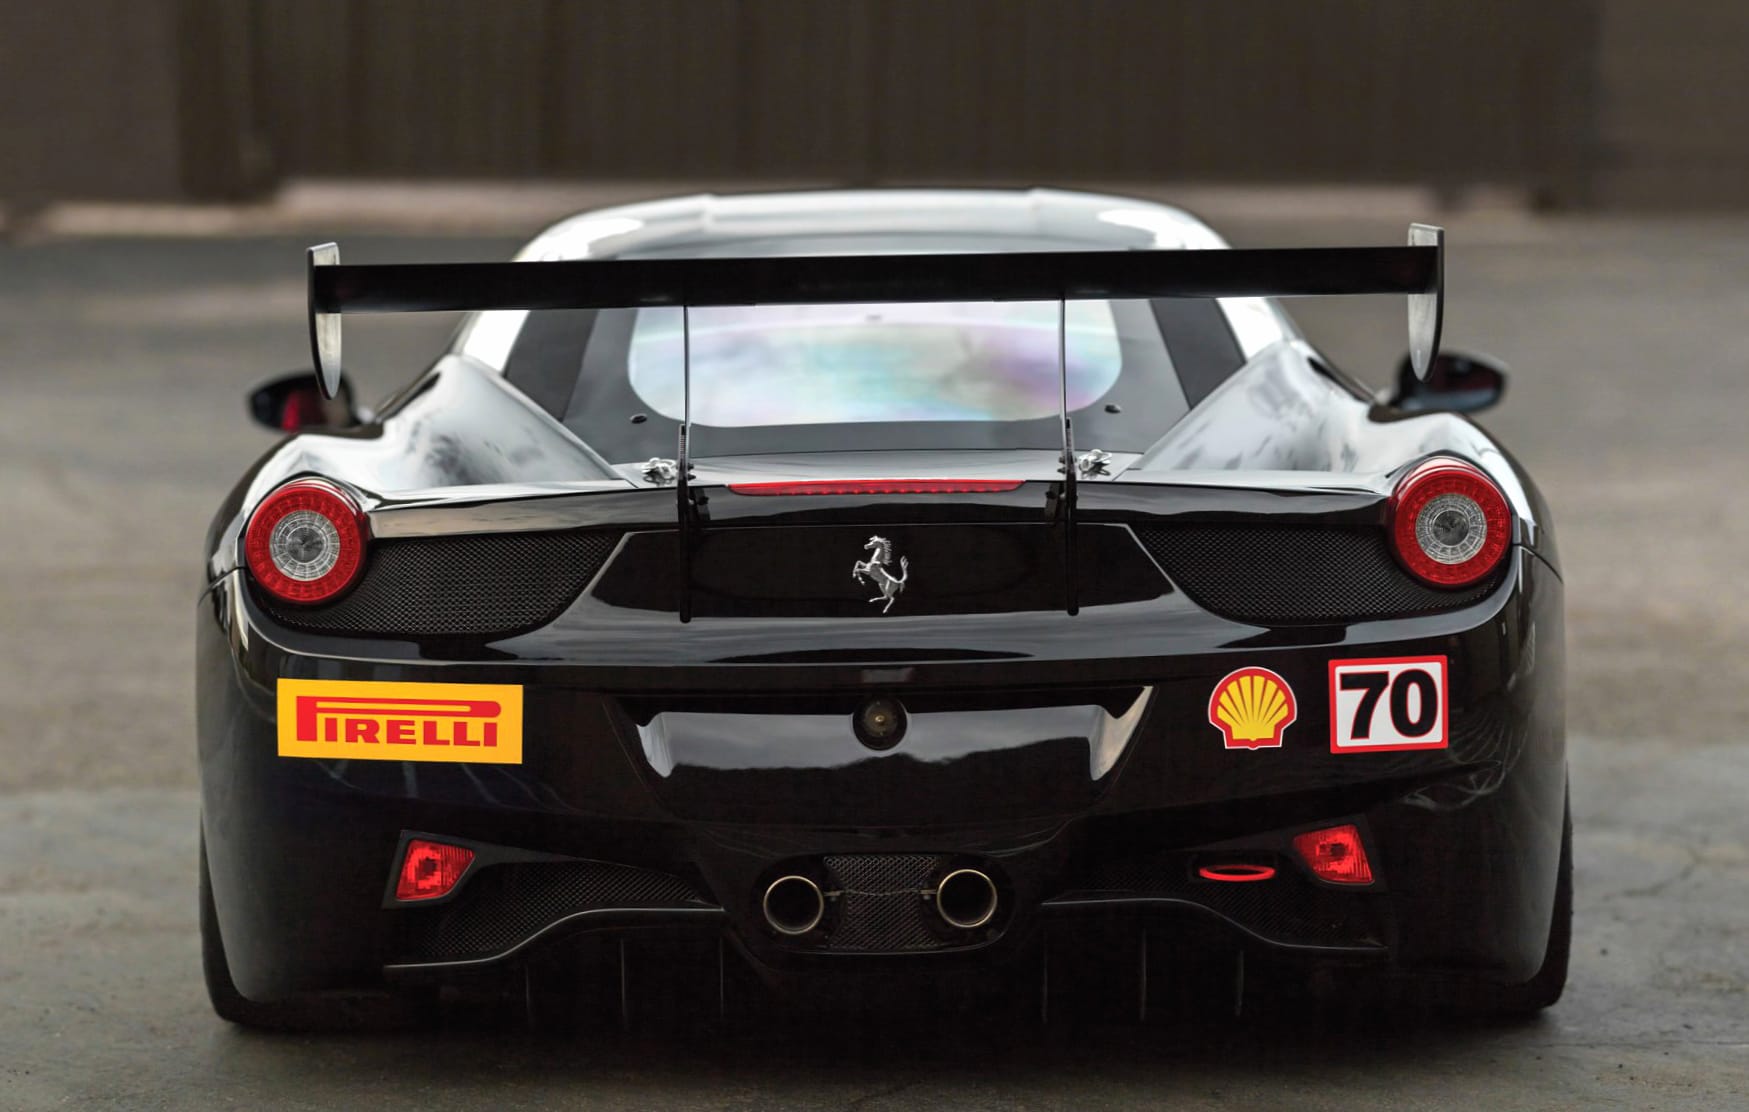 Ferrari 458 Challenge Evoluzione at 1152 x 864 size wallpapers HD quality